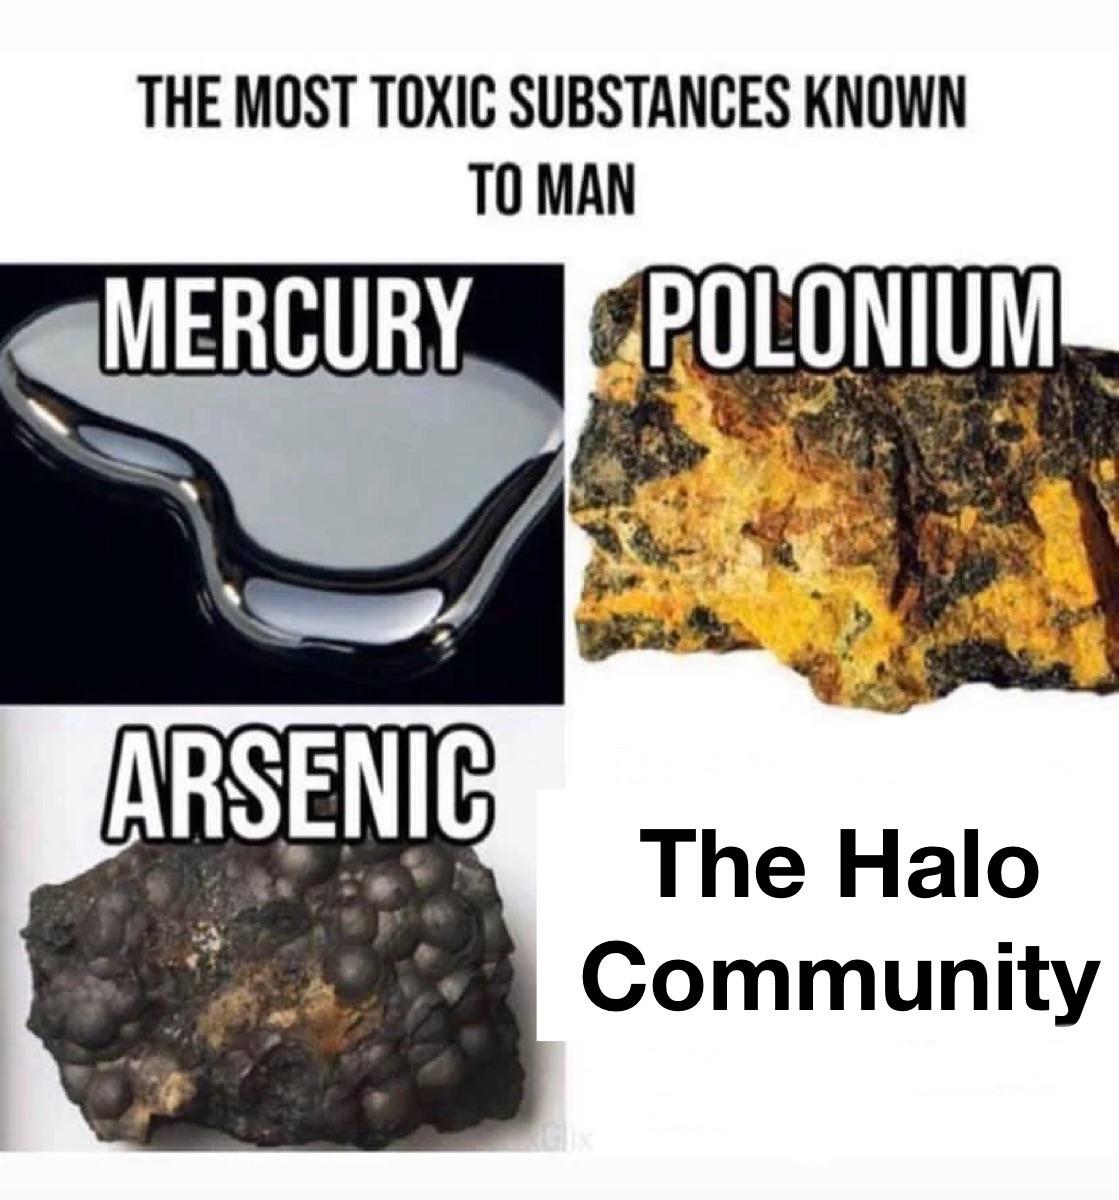 Gaming memes - most toxic substances meme - The Most Toxic Substances Known To Man Mercury Polonium Arsenic The Halo Community